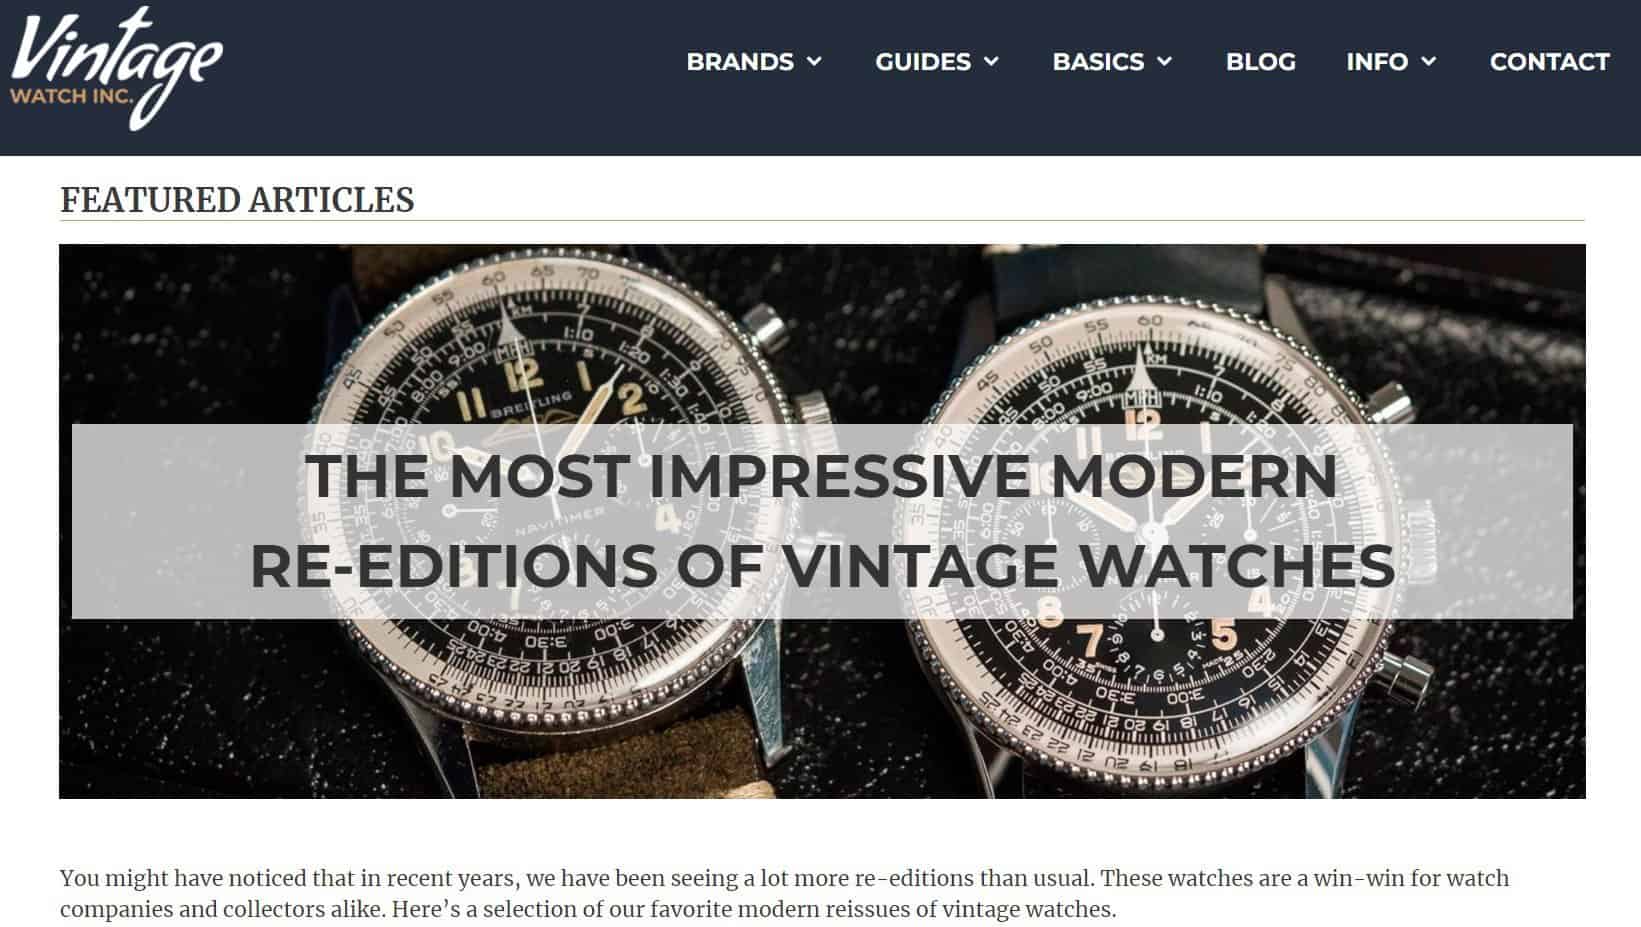 Vintage Watch Inc